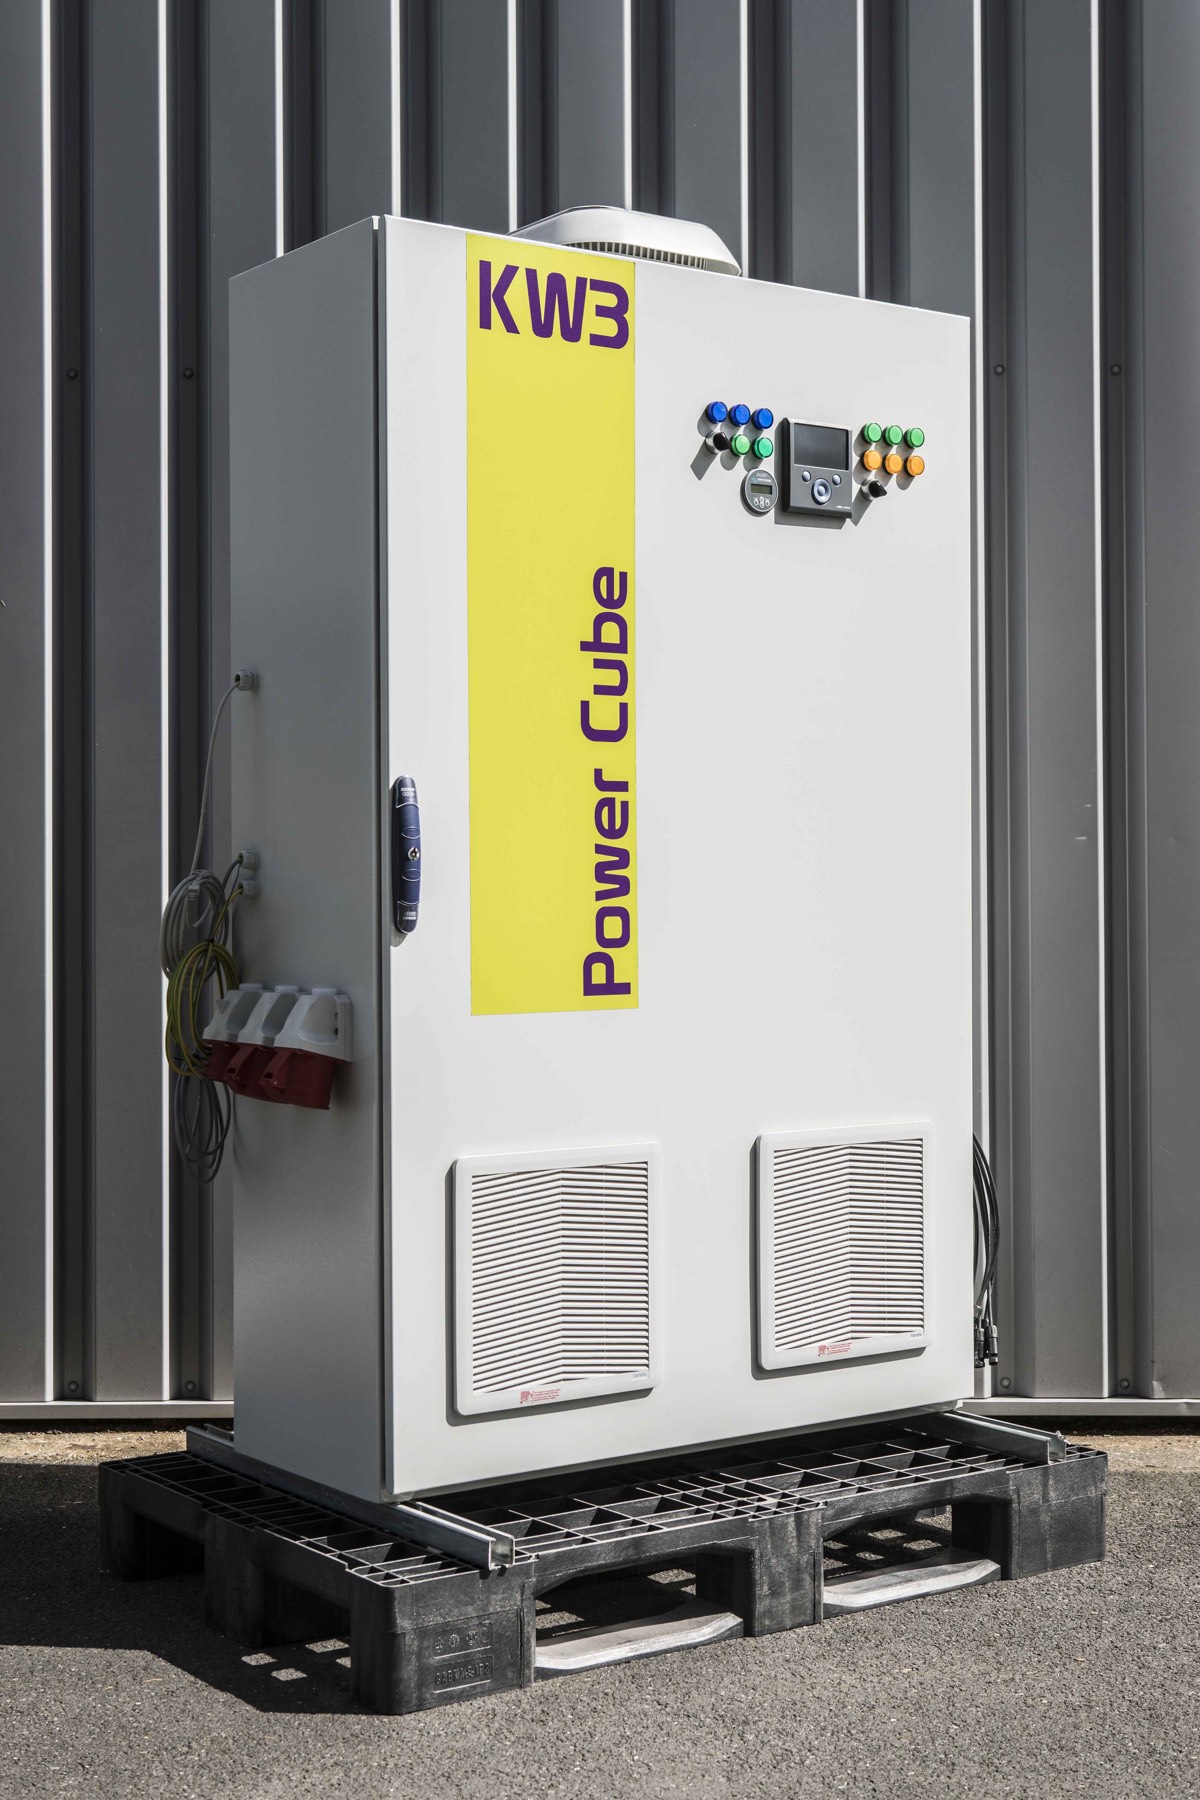 KW3 - Power Cube Libre Energie